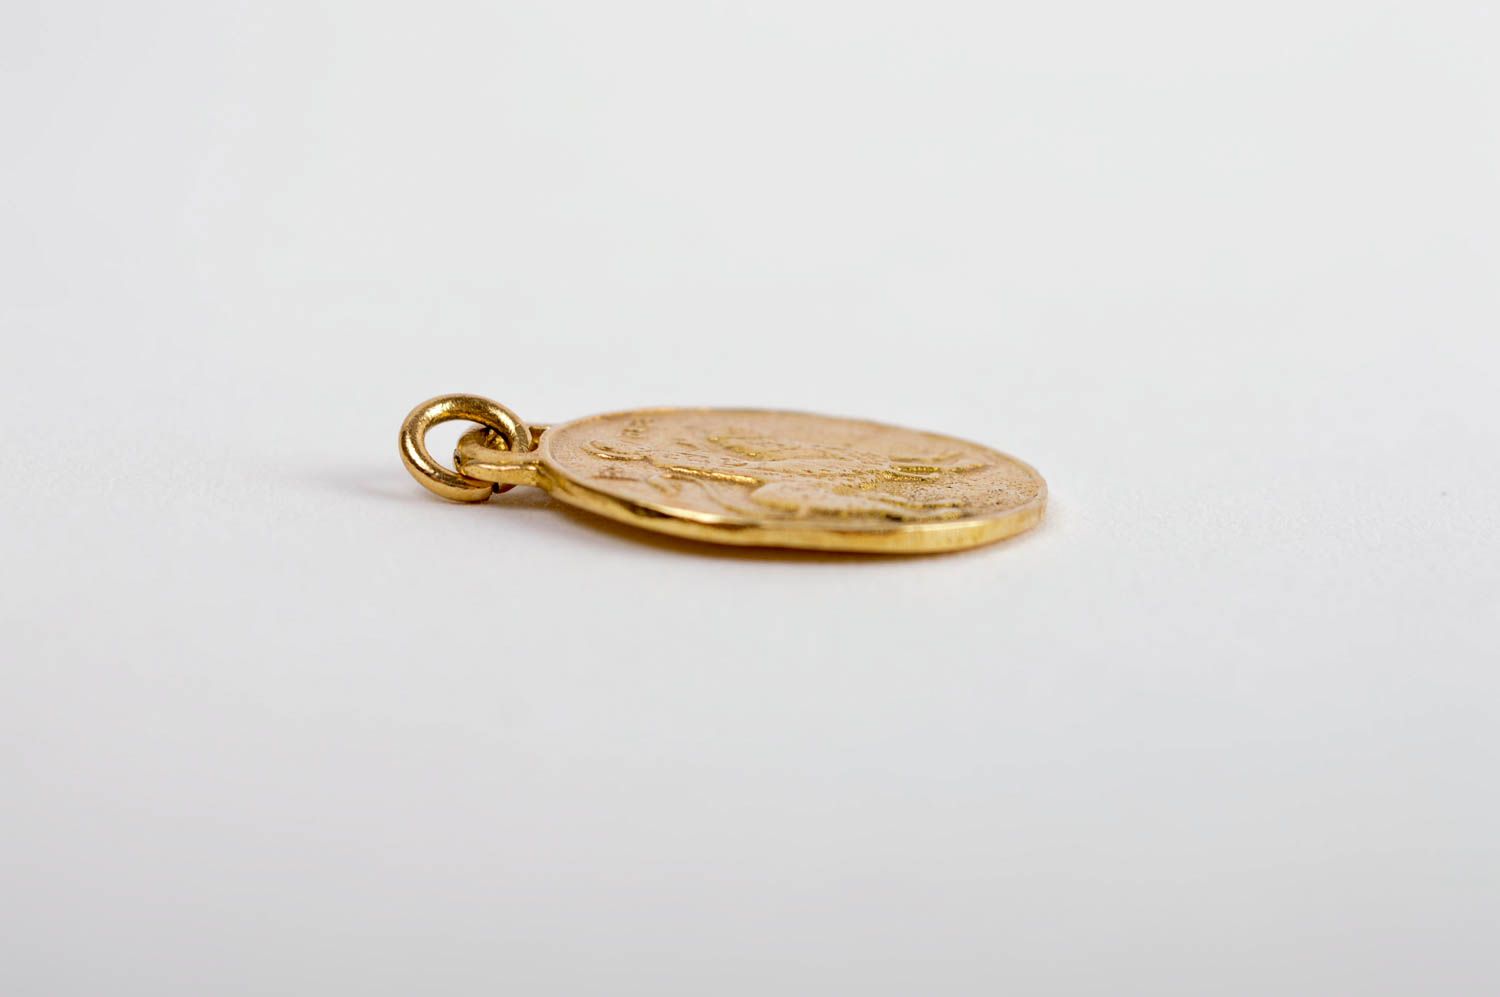 Handmade brass pendant unusual neck accessory stylish designer pendant photo 4